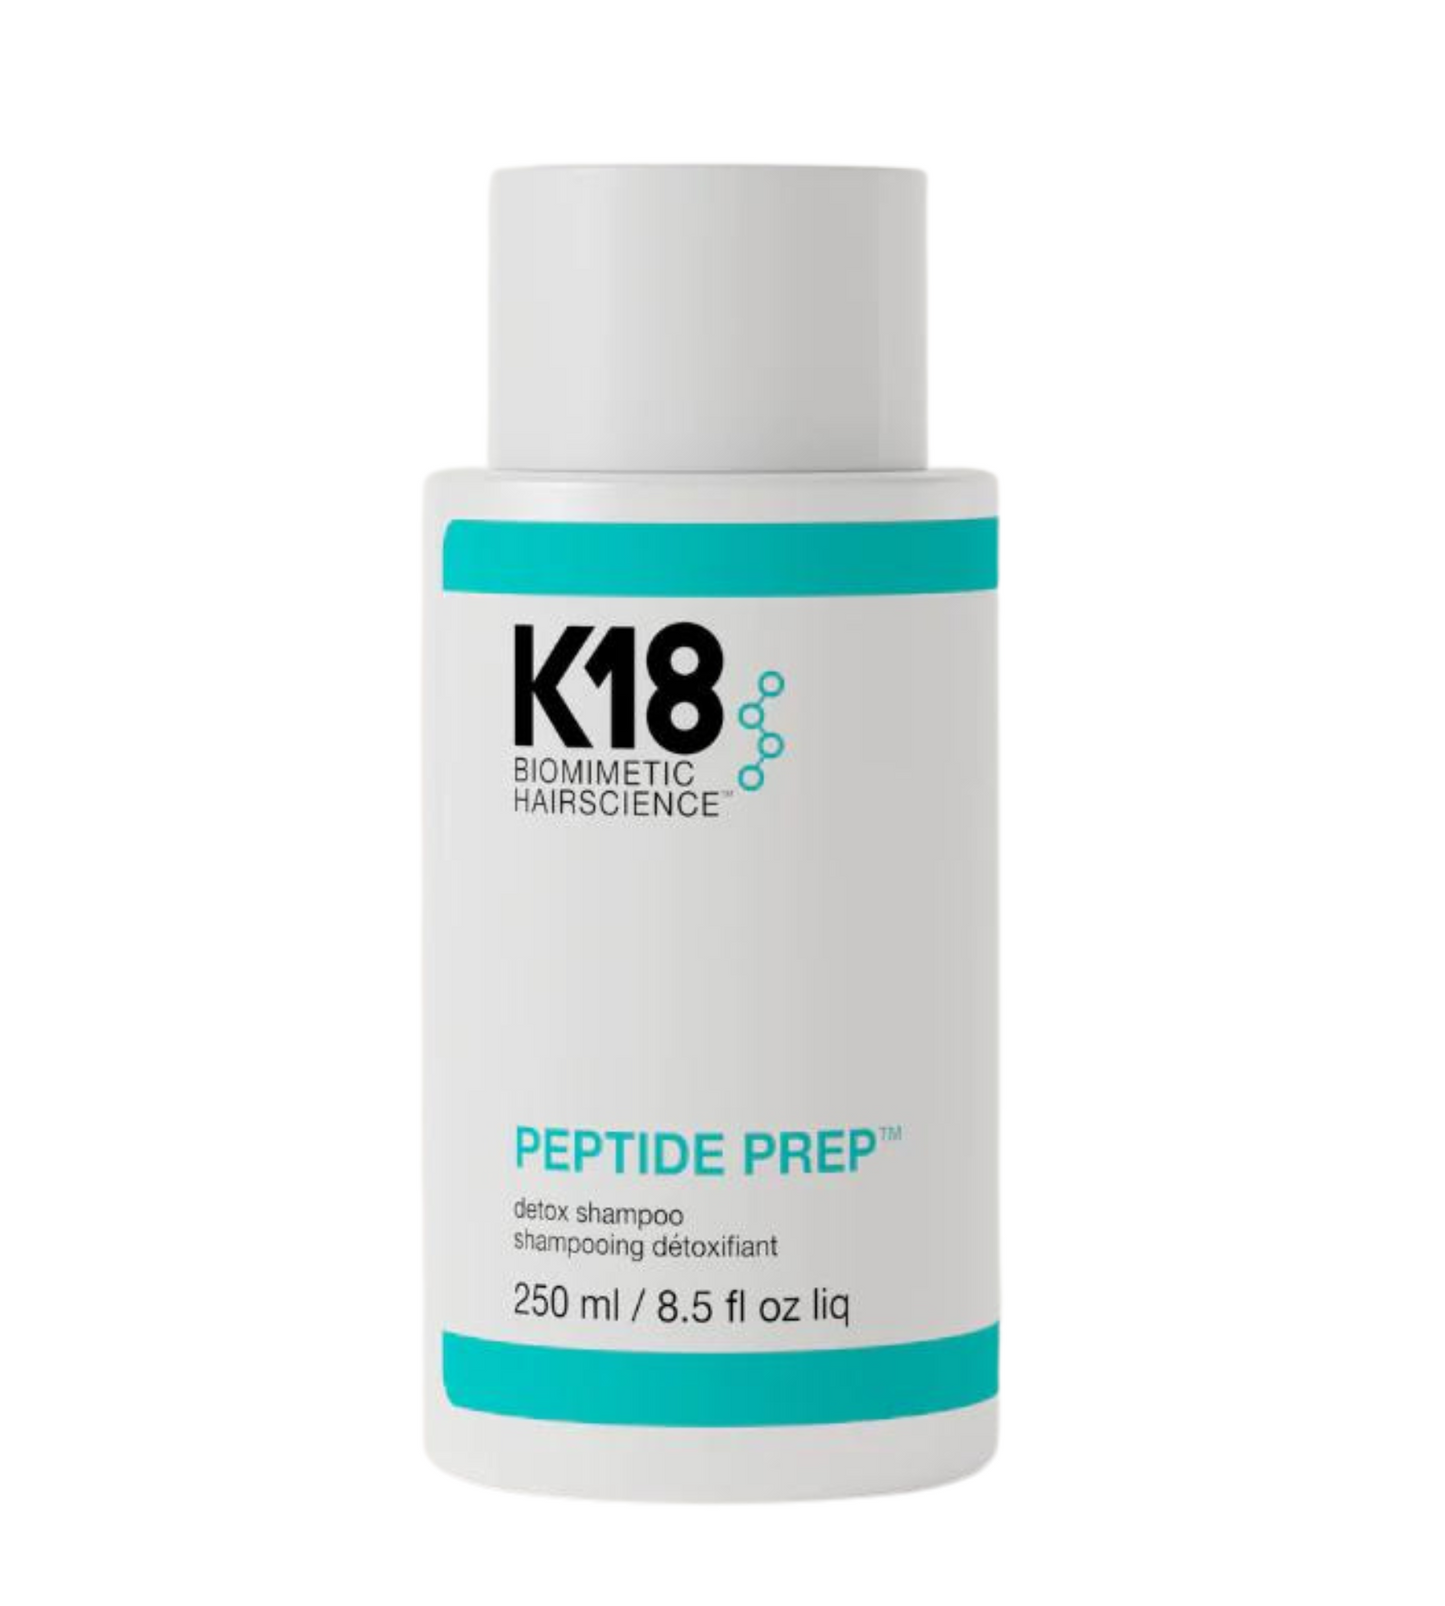 PEPTIDE PREP™ detox shampoo